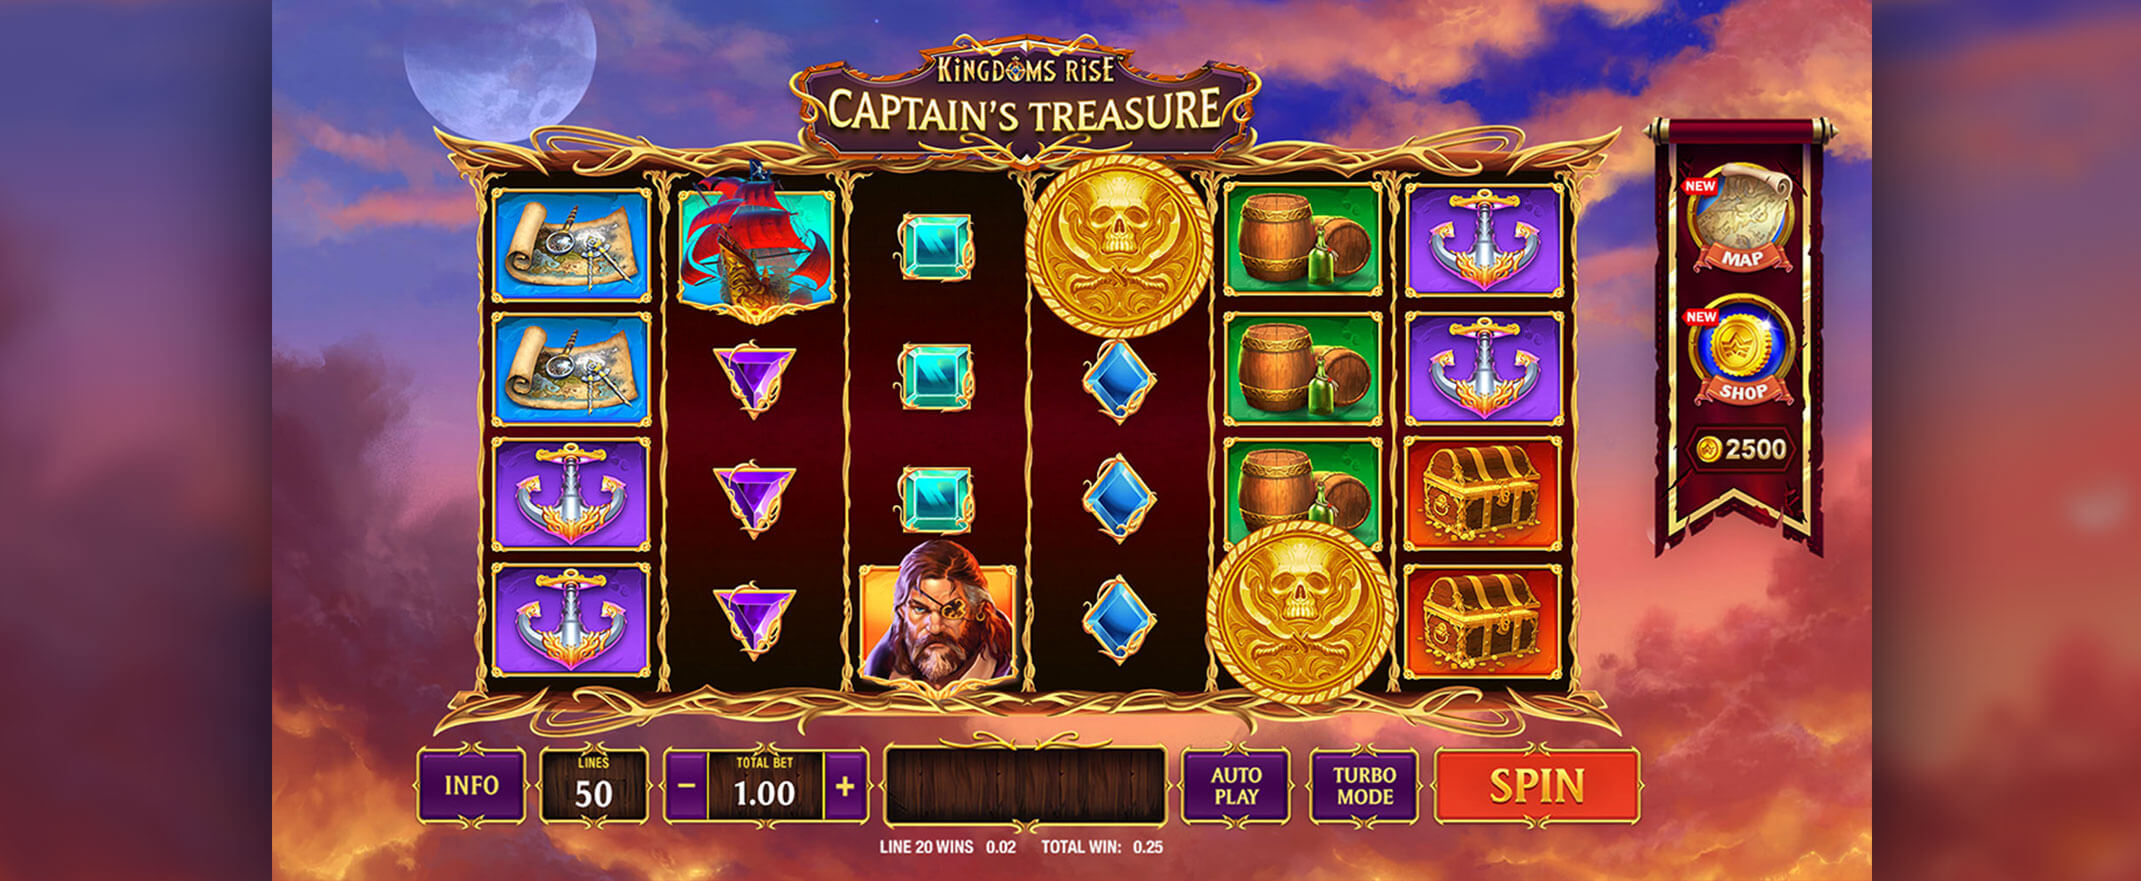 Kingdoms Rise - Captain’s Treasure Spielautomaten Bewertung